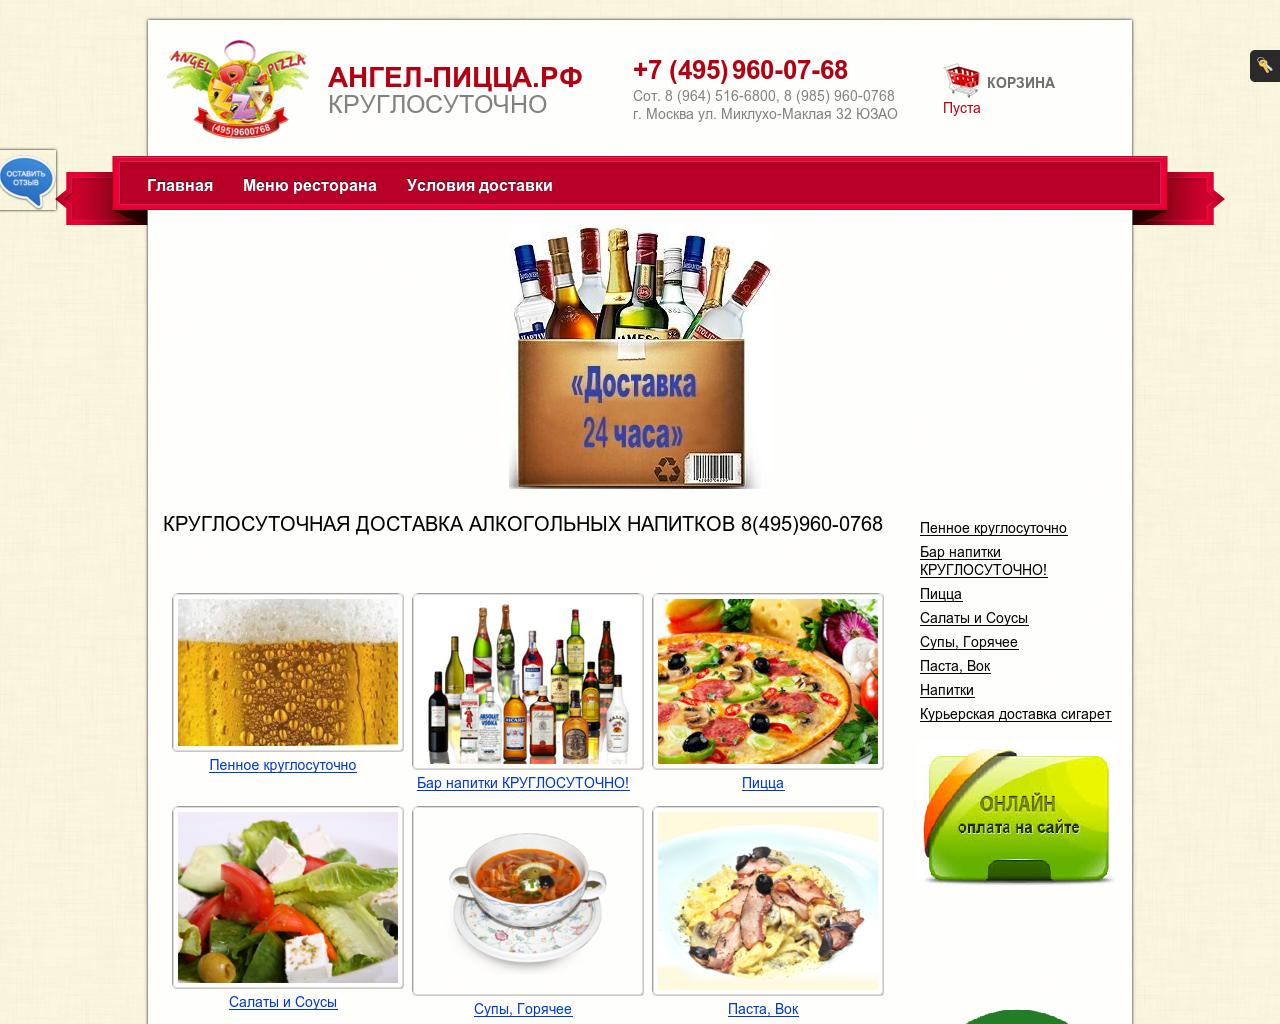 Изображение сайта angel-pizza.ru в разрешении 1280x1024